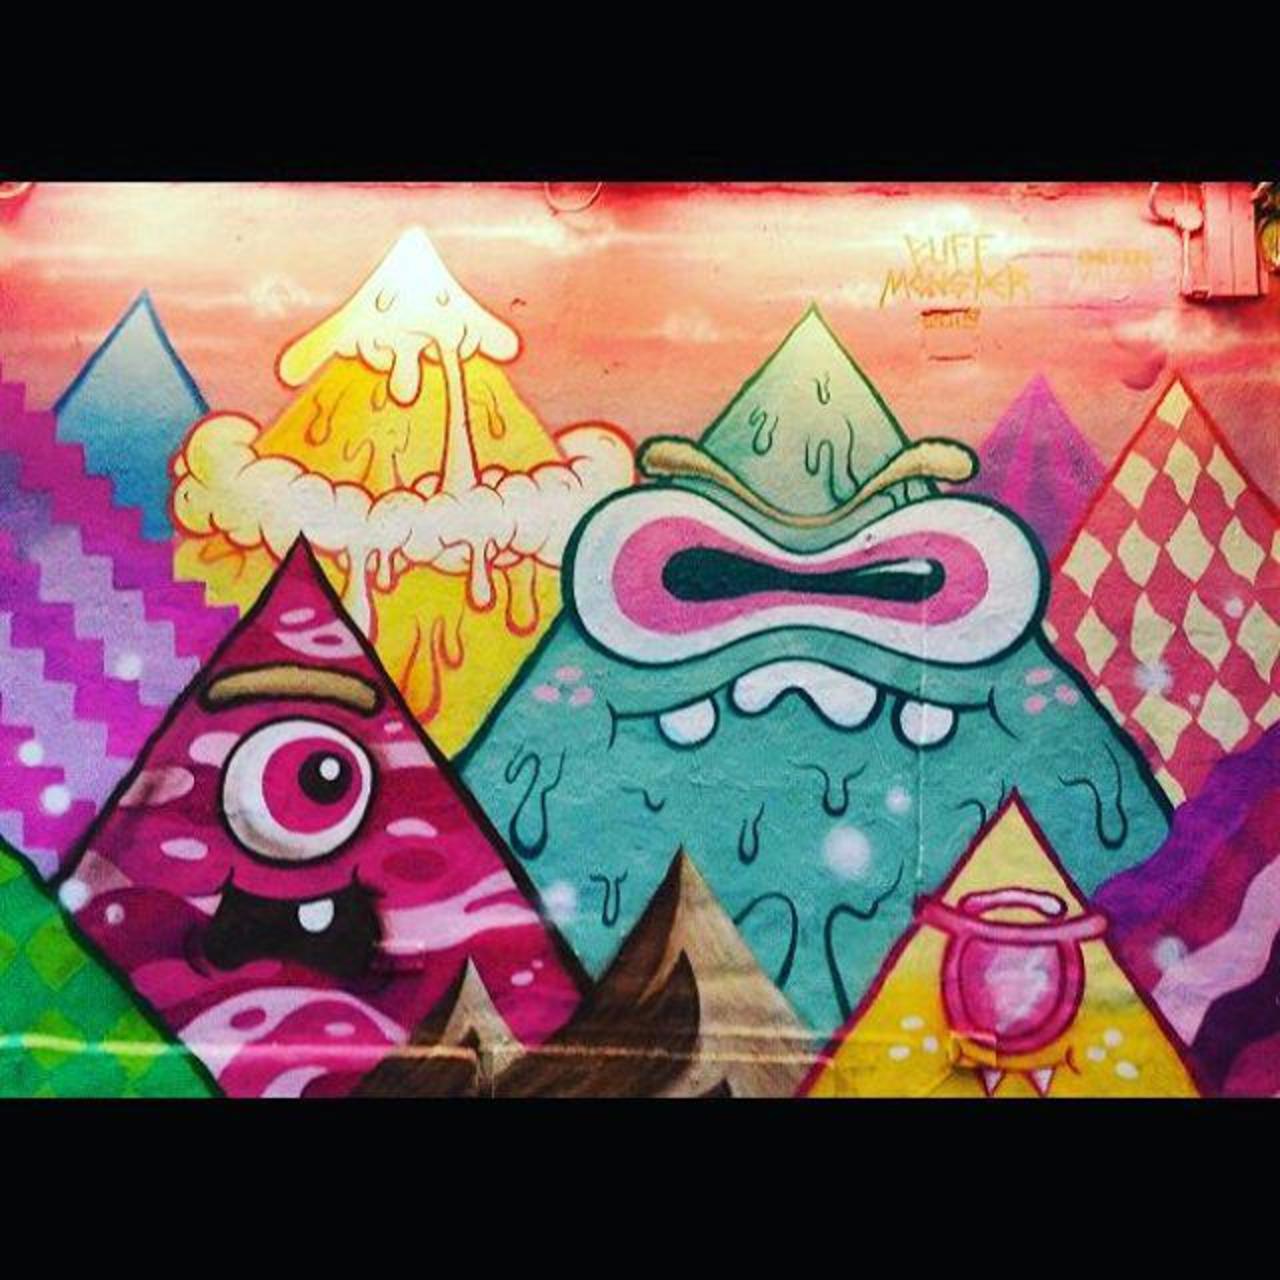 New #buffmaster mural in nolita.  #streetartnyc #nycgrafart #graffiti #grafart by mazzerdaz http://t.co/9McV0pUyaM